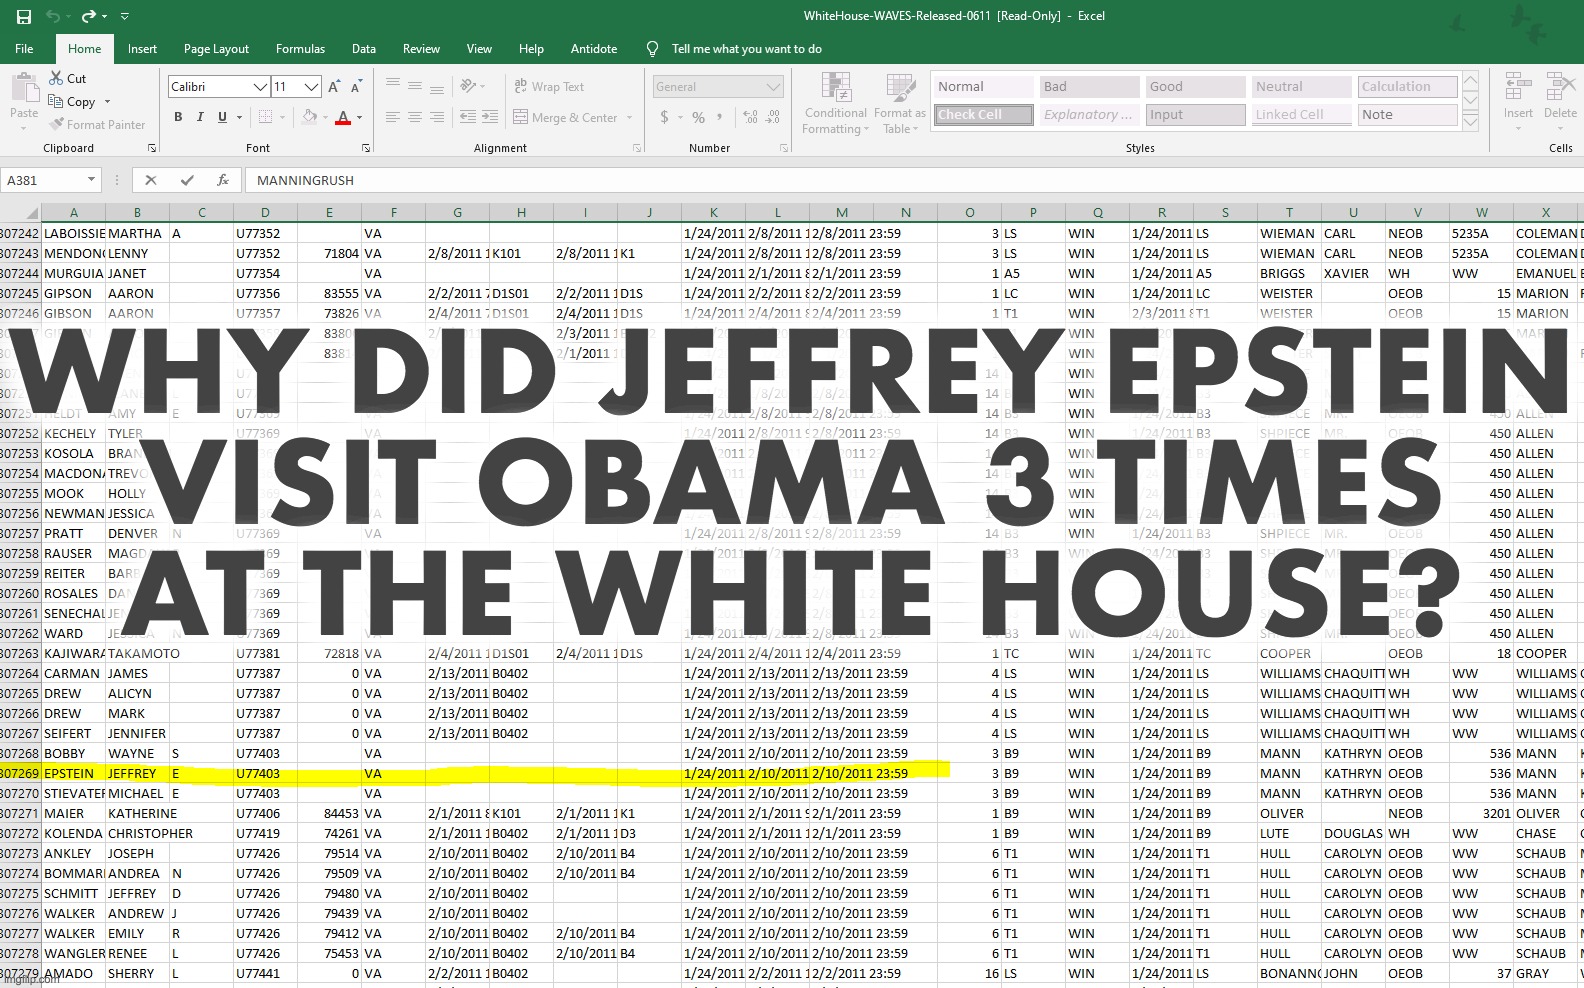 Why did Jeffrey Epstein visit Obama 3 times at the White House? | WHY DID JEFFREY EPSTEIN
VISIT OBAMA 3 TIMES
AT THE WHITE HOUSE? | image tagged in barack obama,jeffrey epstein,white house | made w/ Imgflip meme maker